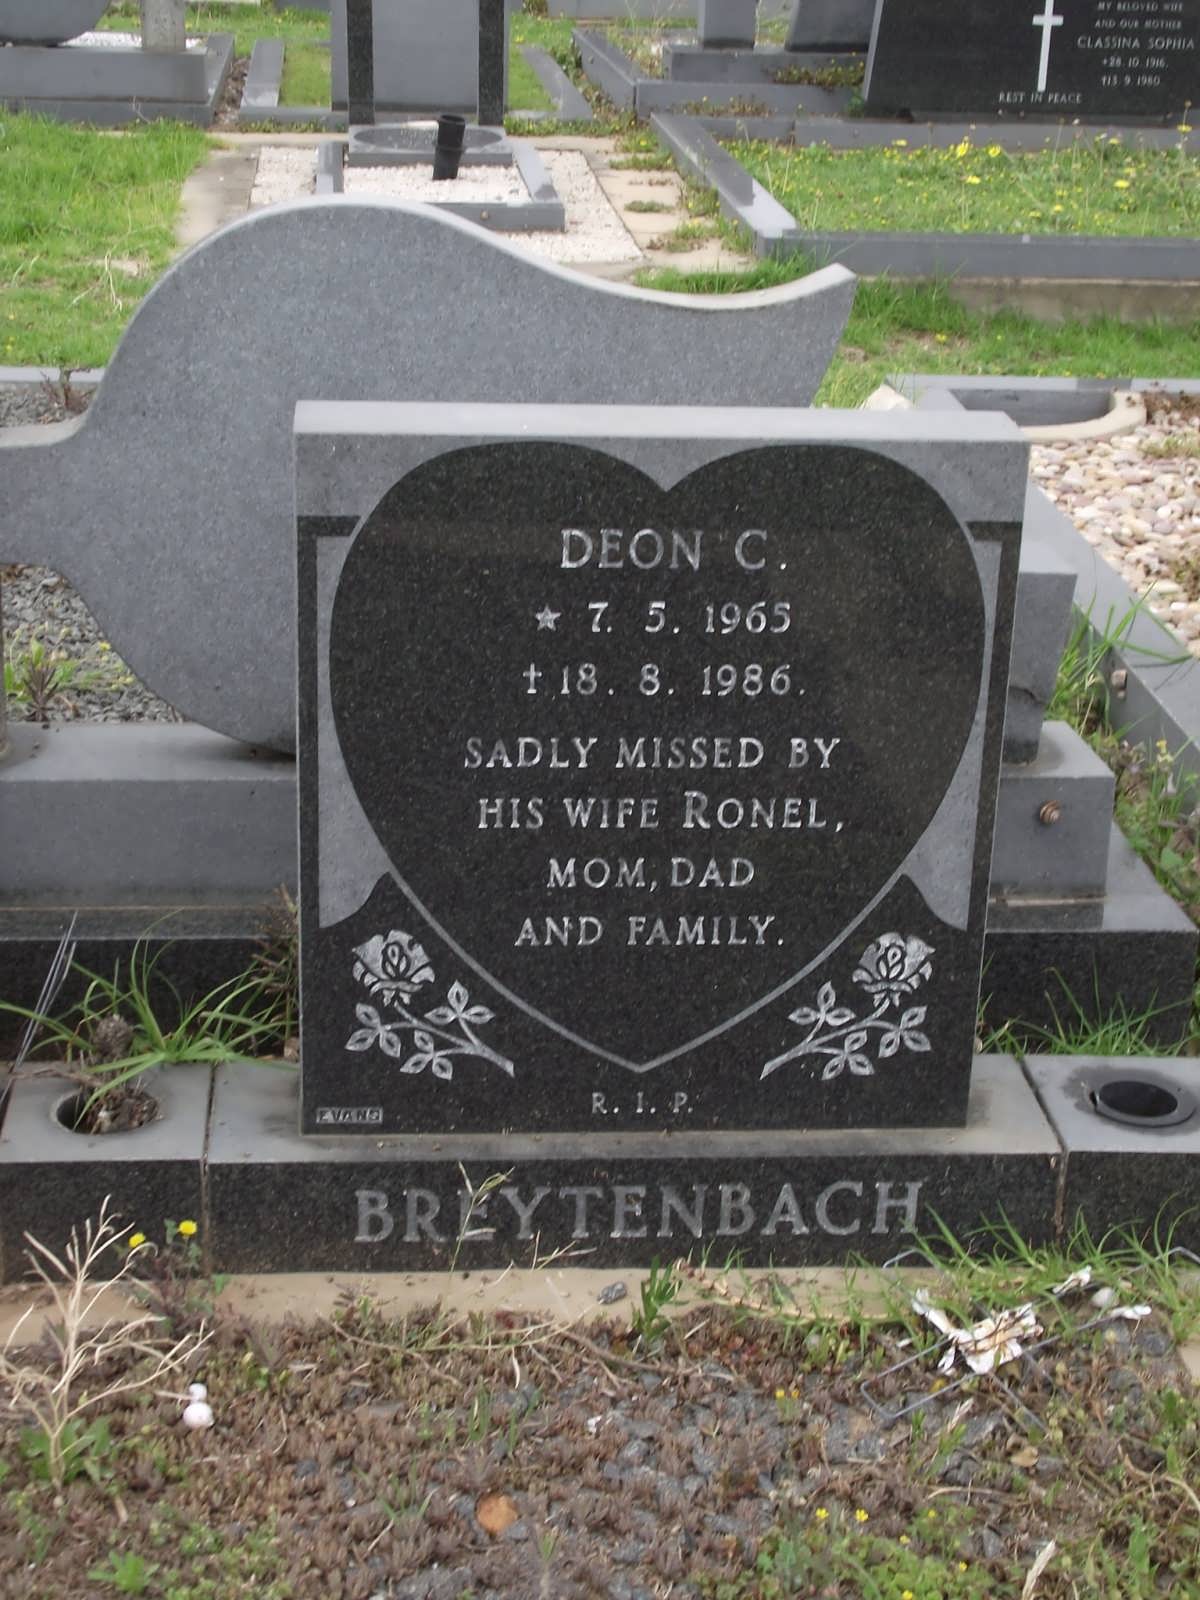 BREYTENBACH Deon C. 1965-1986